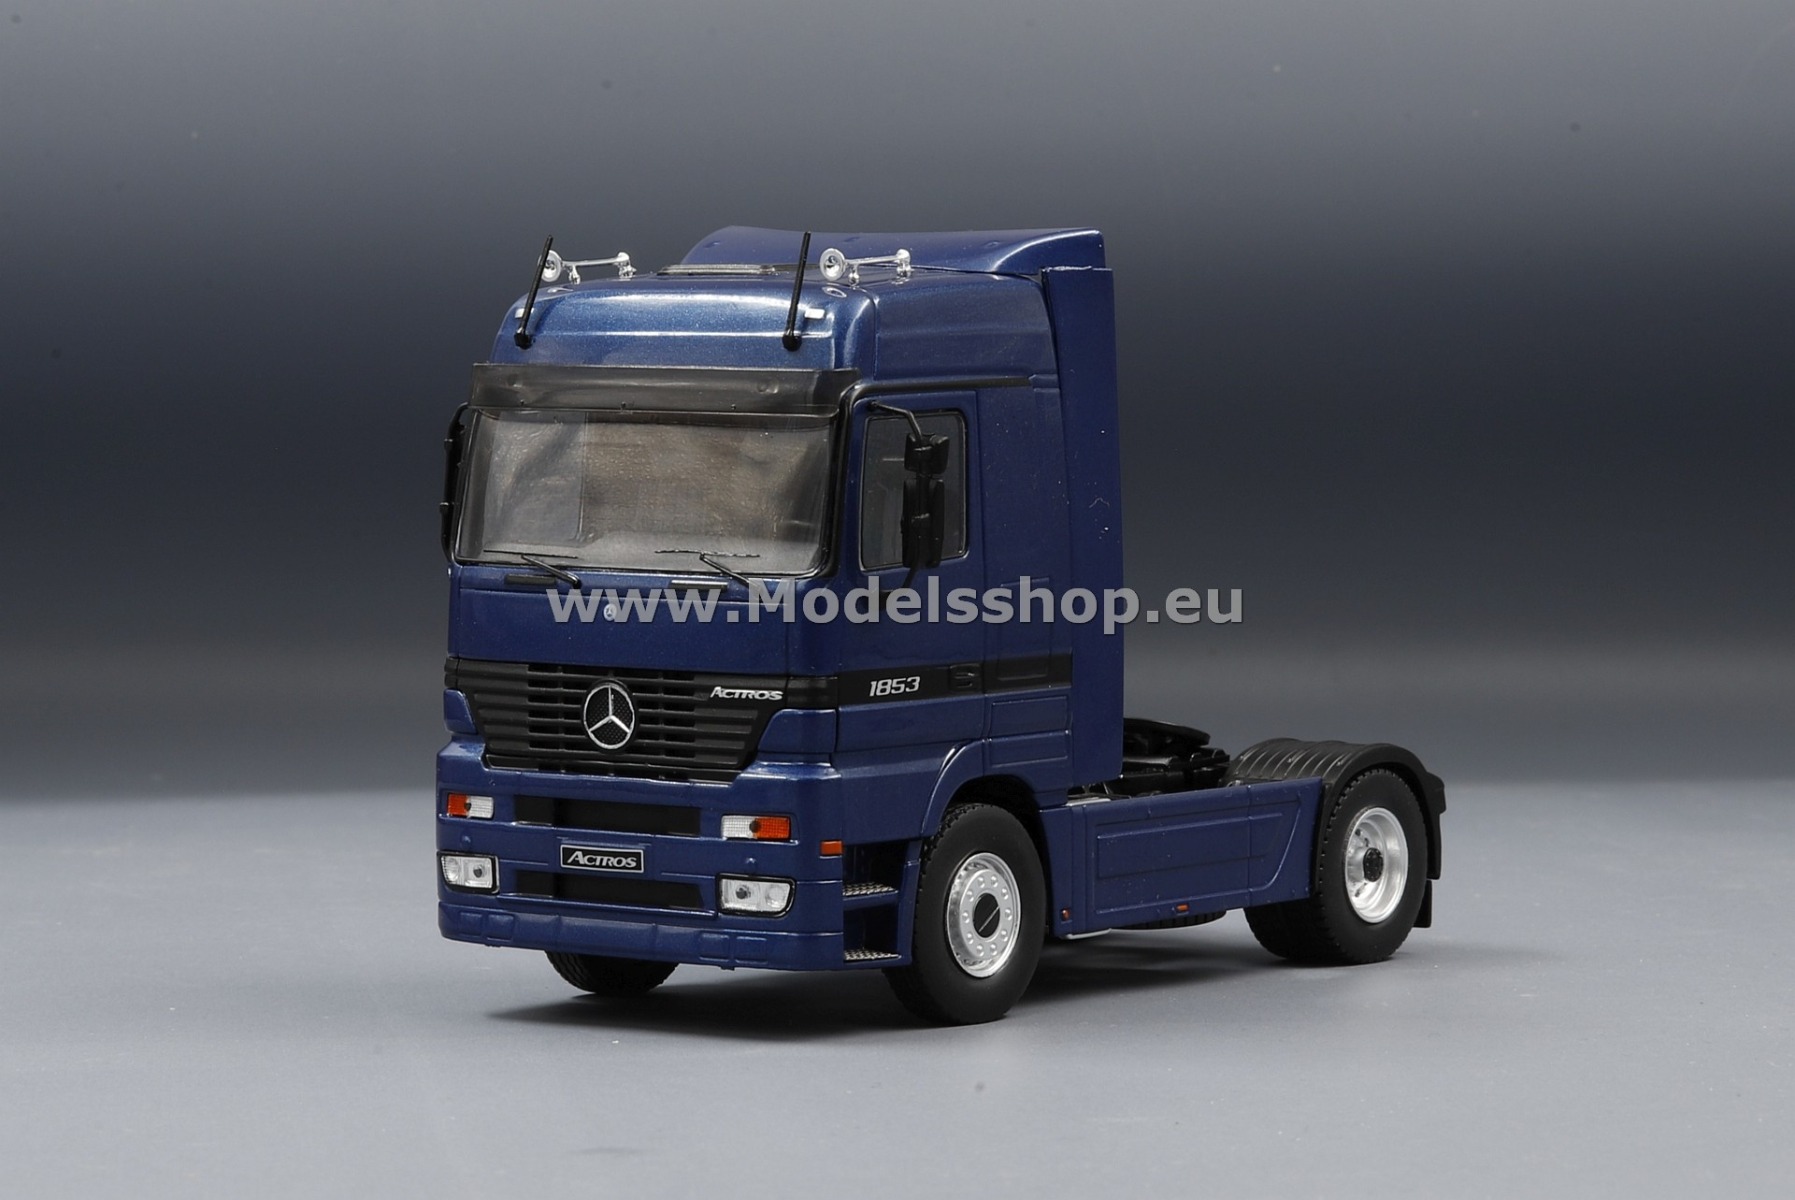 IXO TR121 Mercedes-Benz Actros MP1 1853 tractor truck, 1995 /dark blue - metallic/